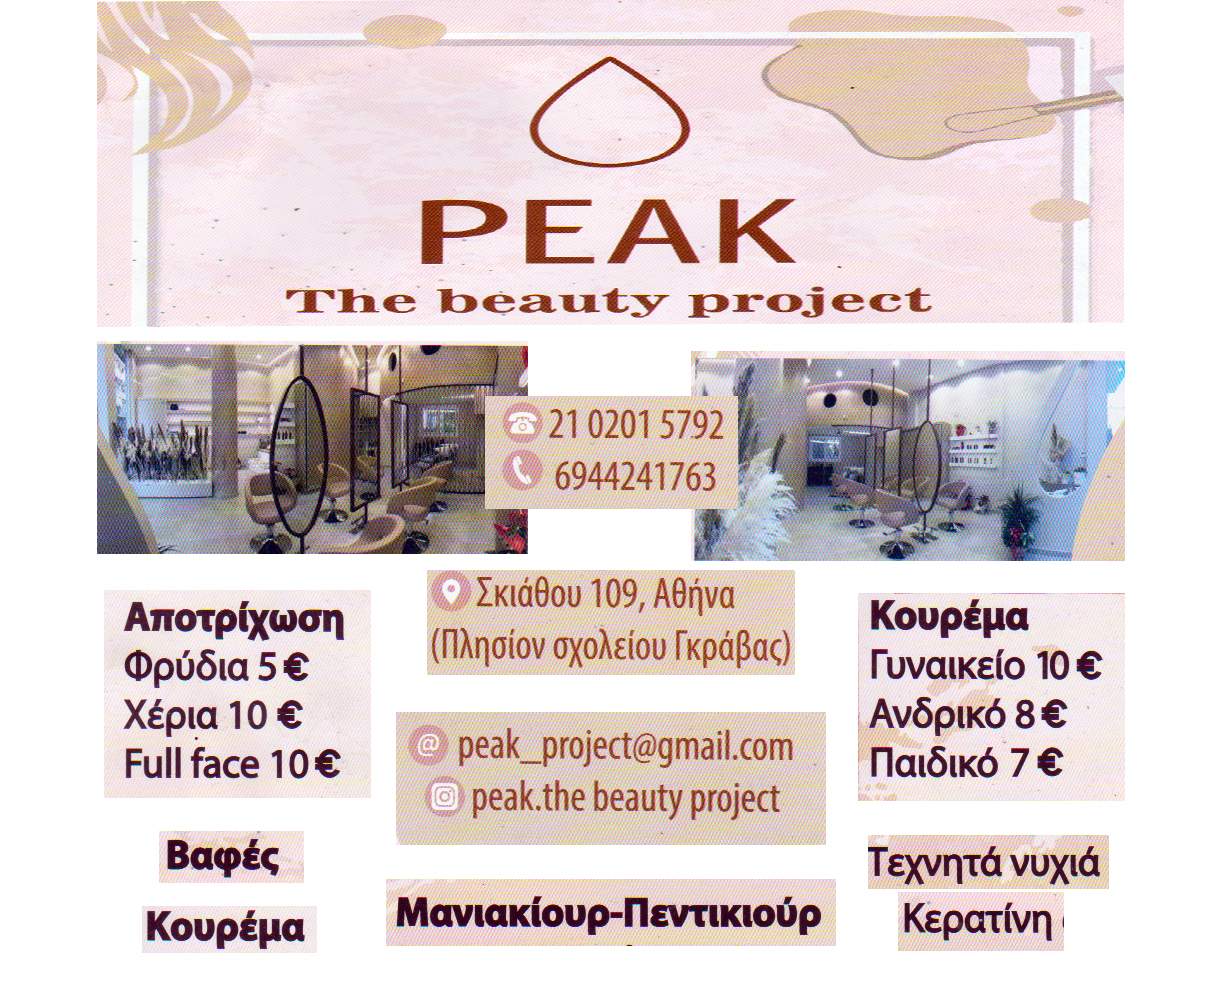 PEAK The beauty project